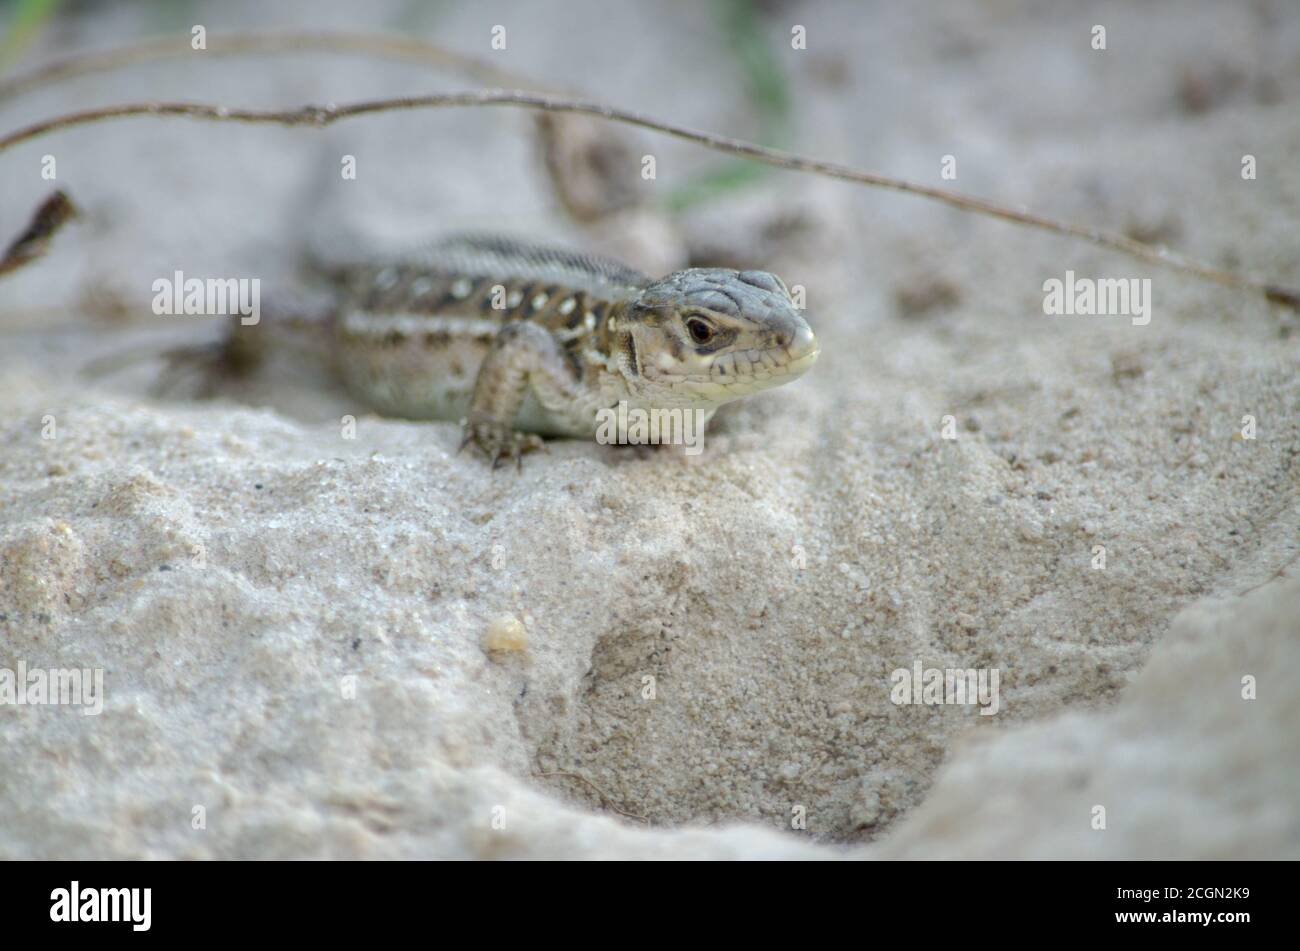 Sand lizard in its natural habitat. Fauna of Ukraine. Shallow depth of field, closeup. Stock Photo